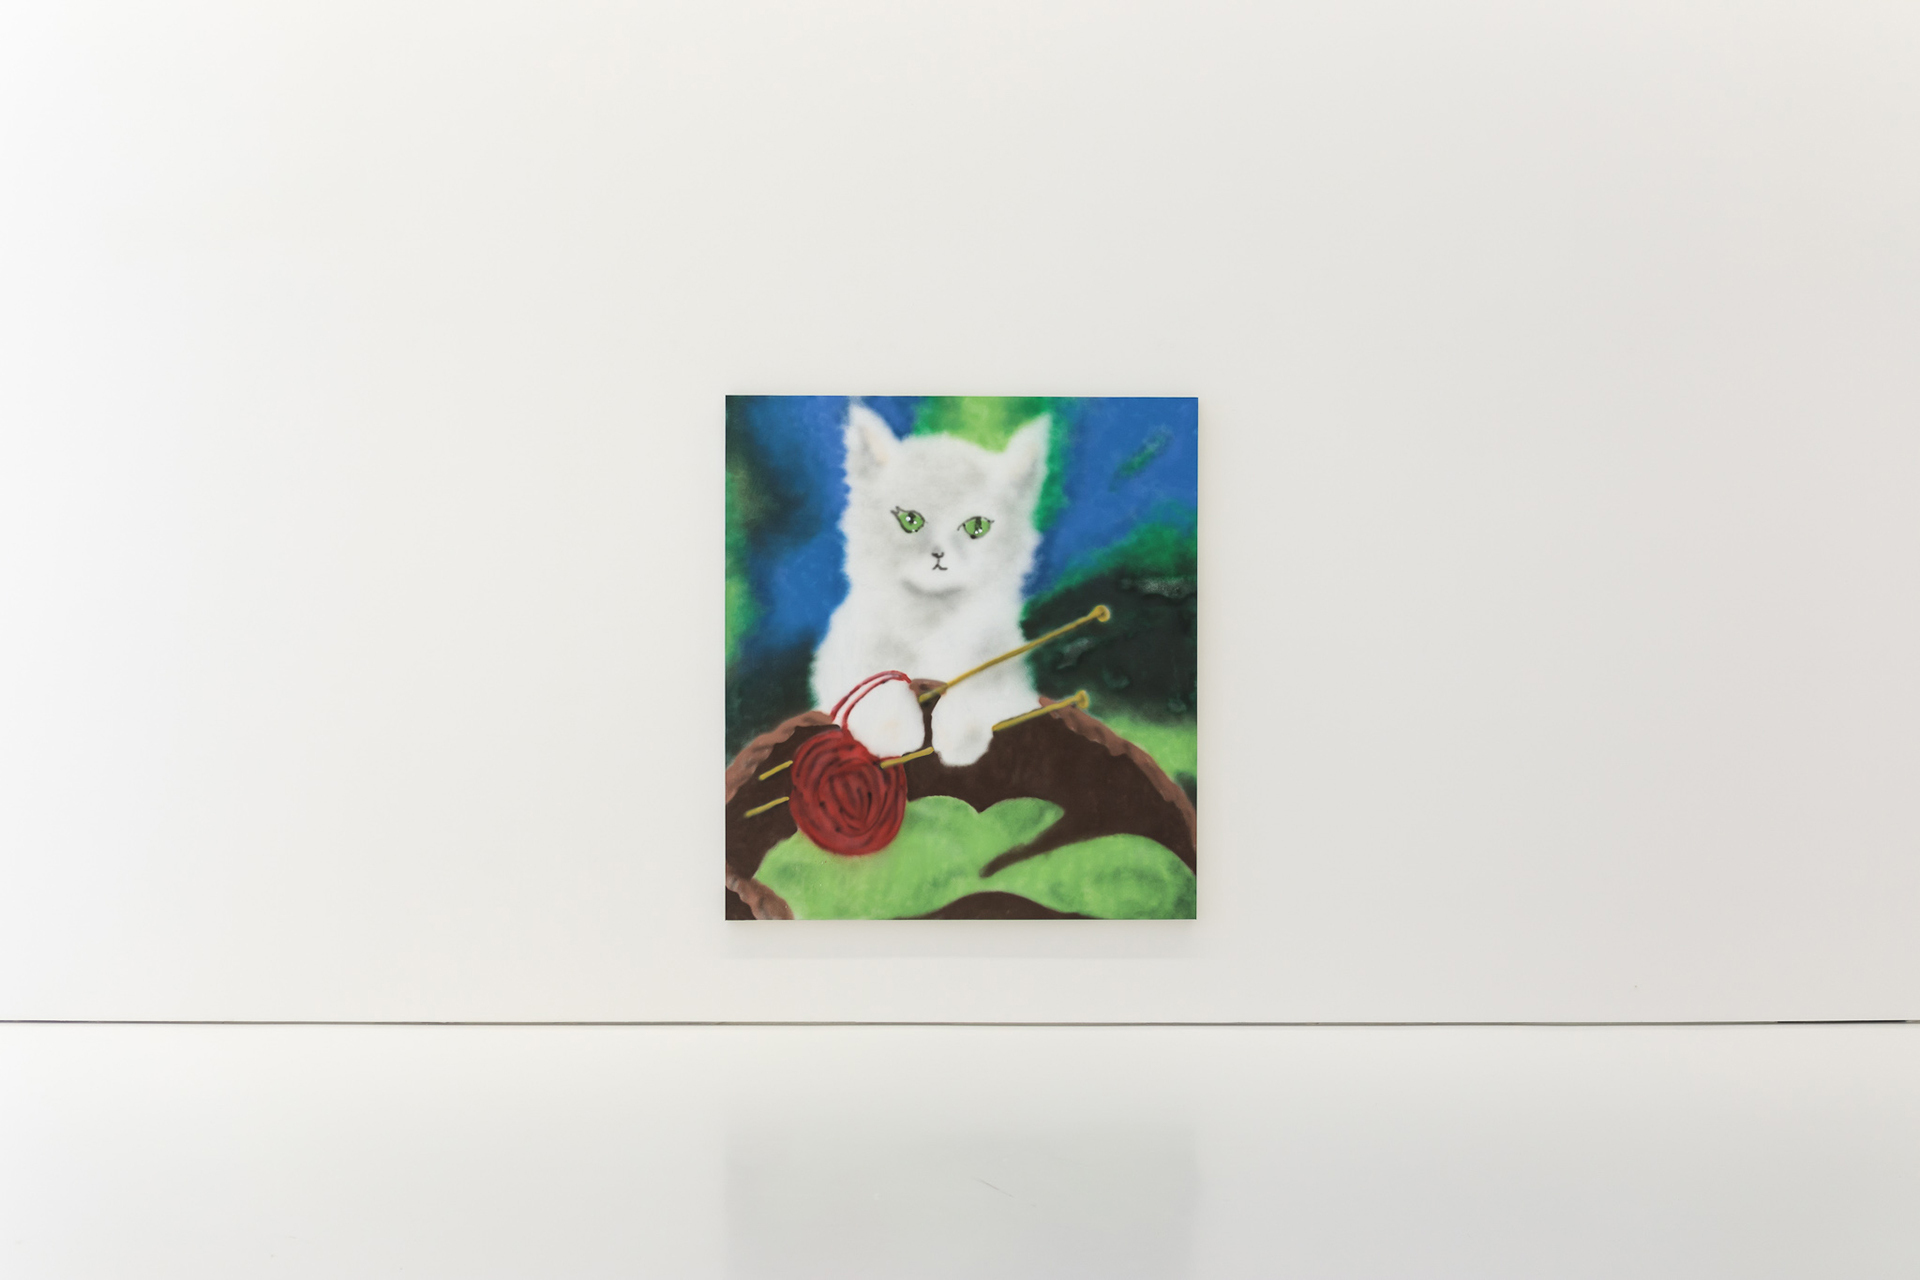 Ricardo Passaporte, First cat, 2021, Acrylic and spray paint on canvas, 200 x 180 cm